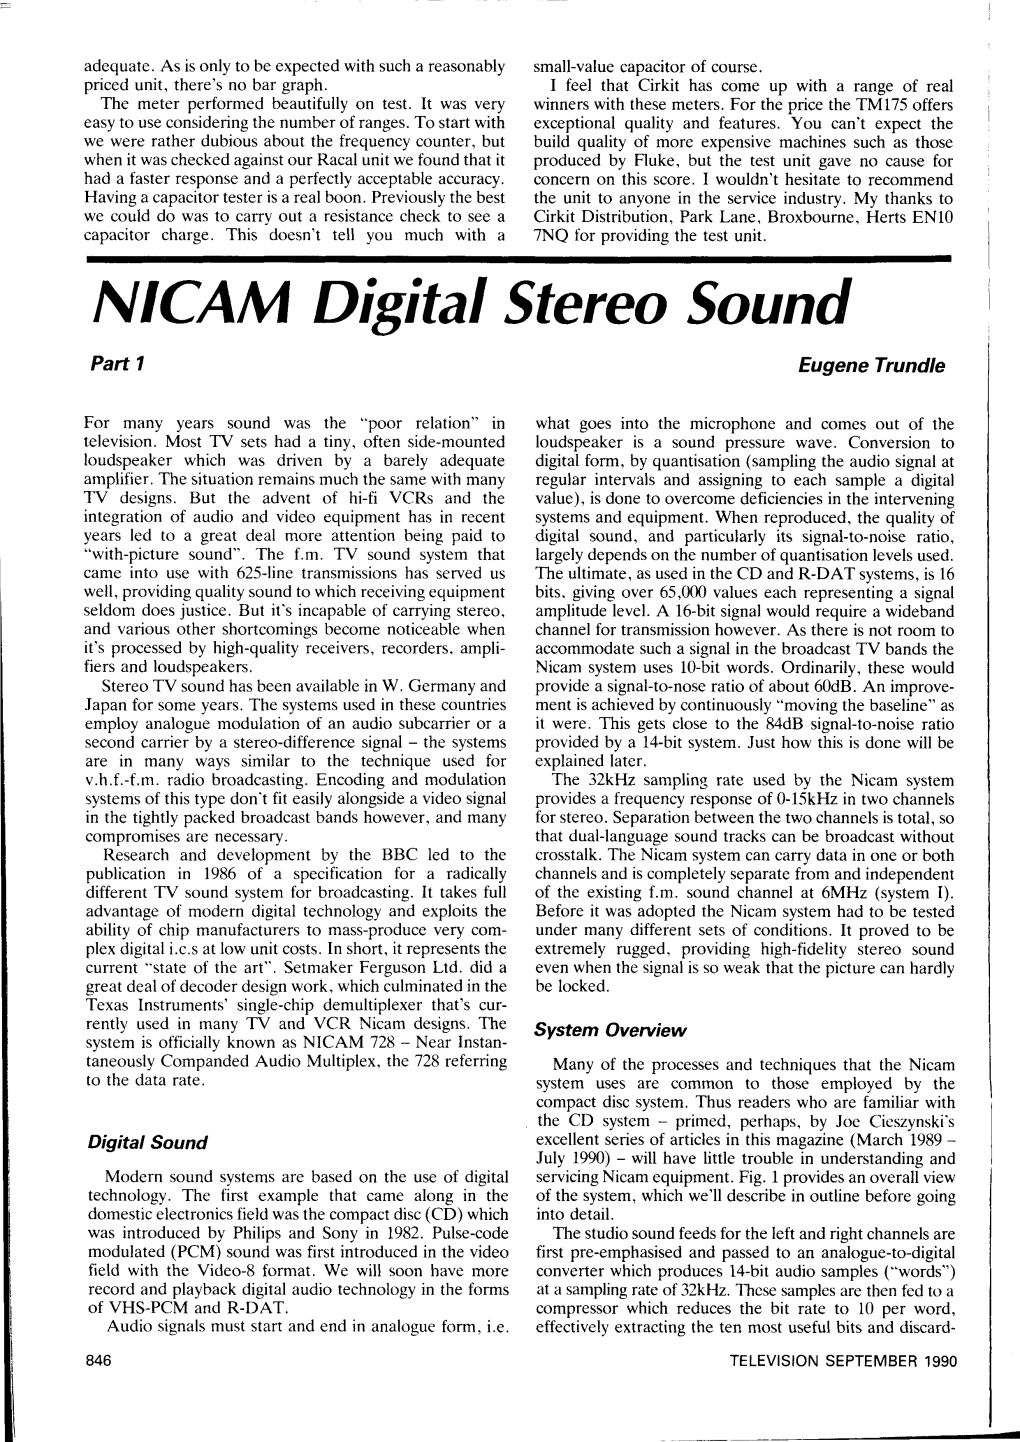 NICAM Digital Stereo Sound